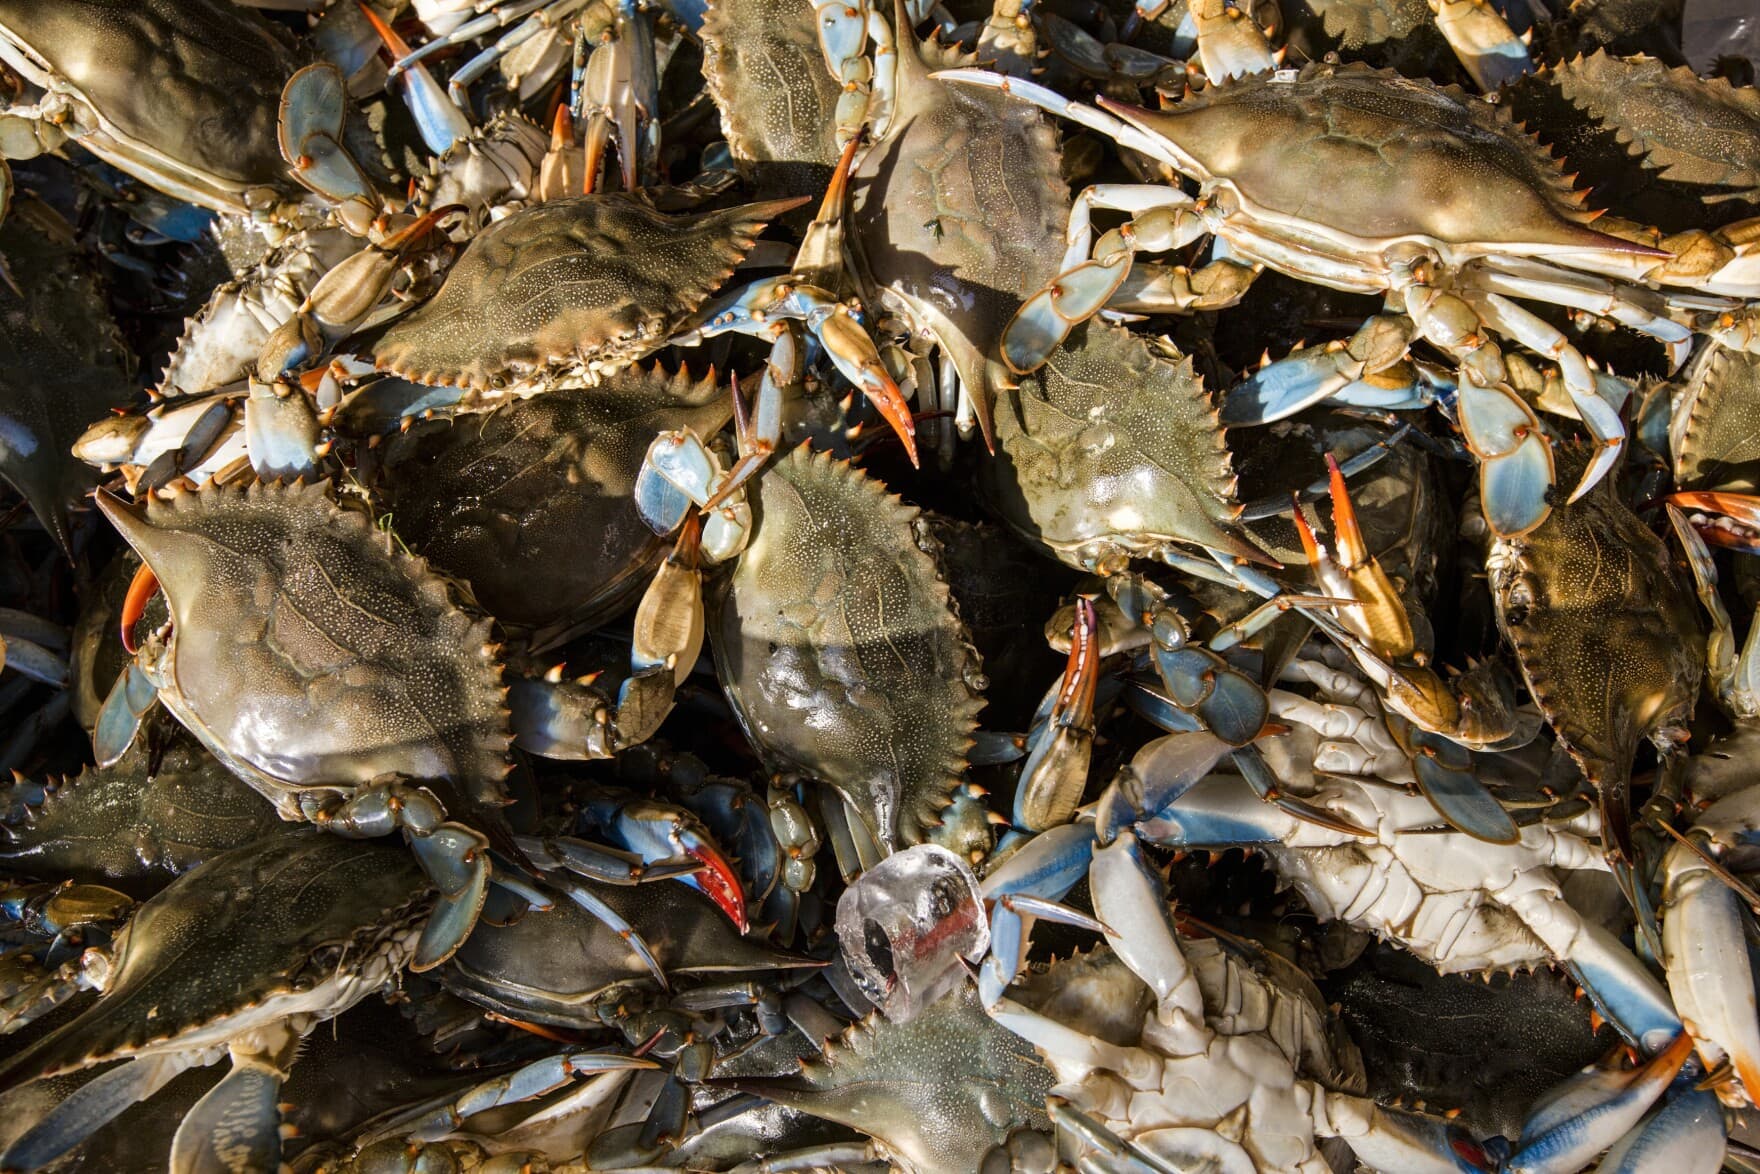 Live blue crabs are displayed for sale. (J. Scott Applewhite/AP)